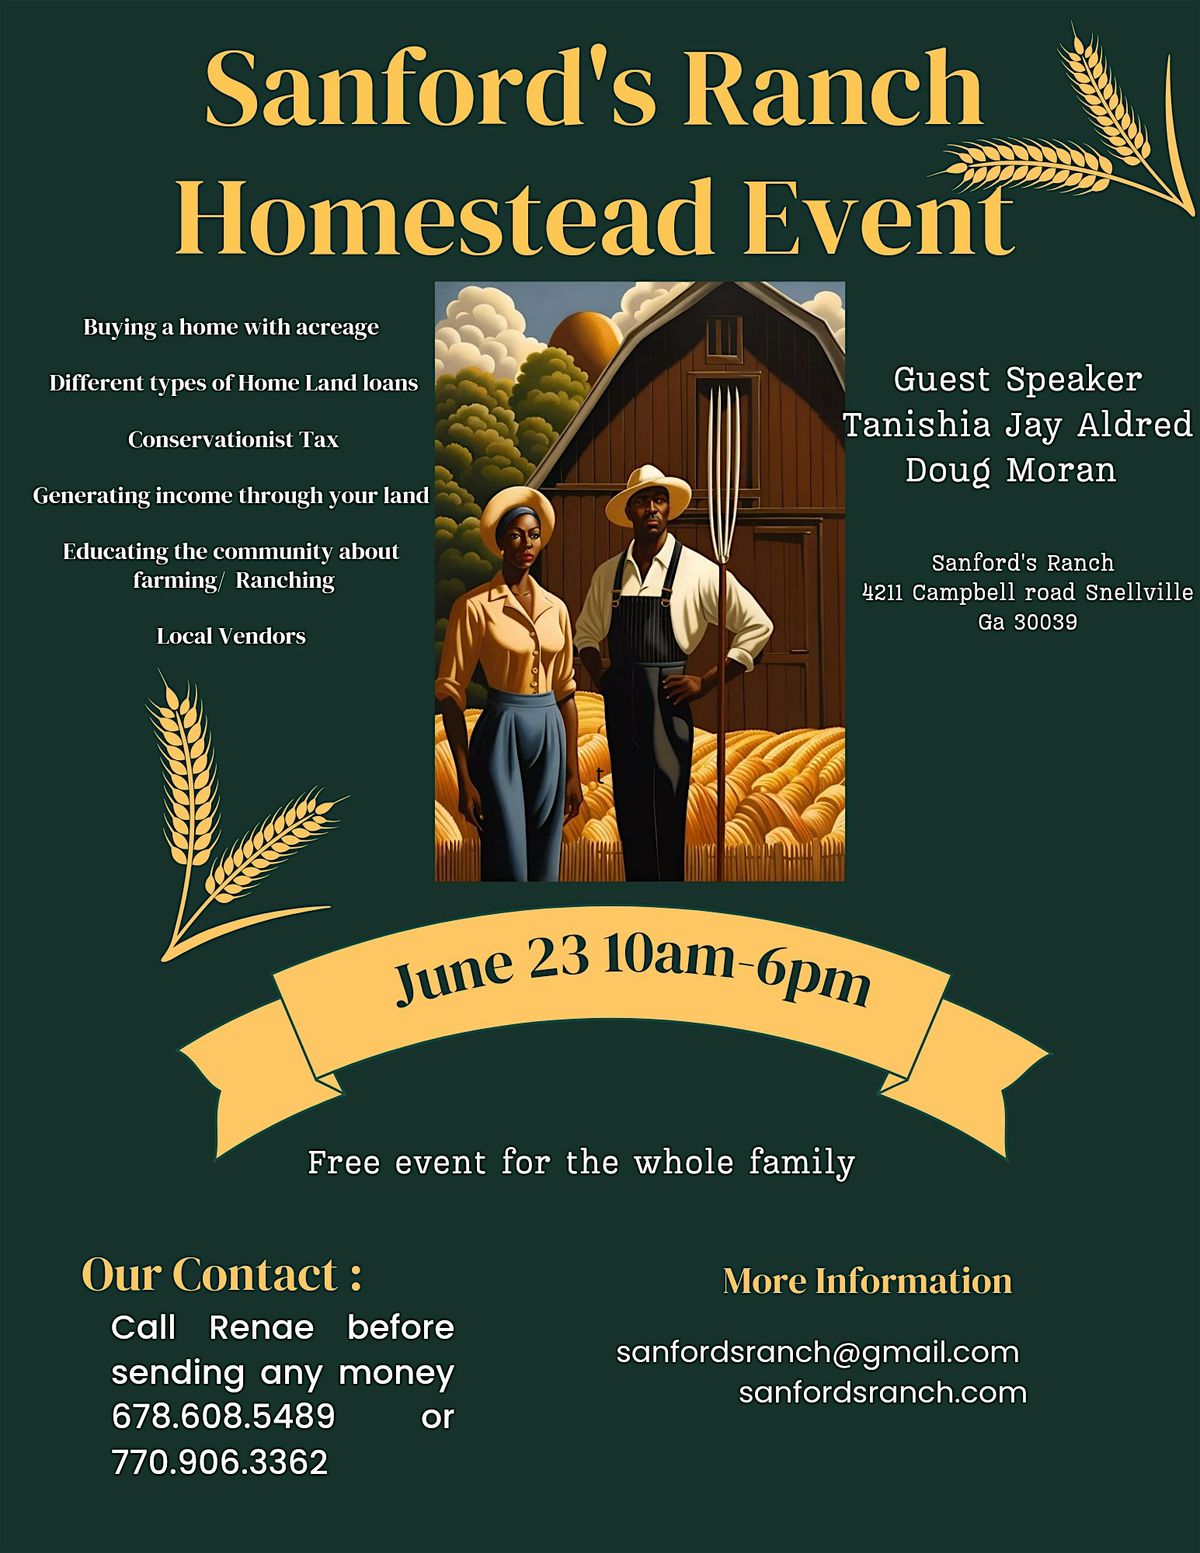 Sanford's Ranch homesteading event